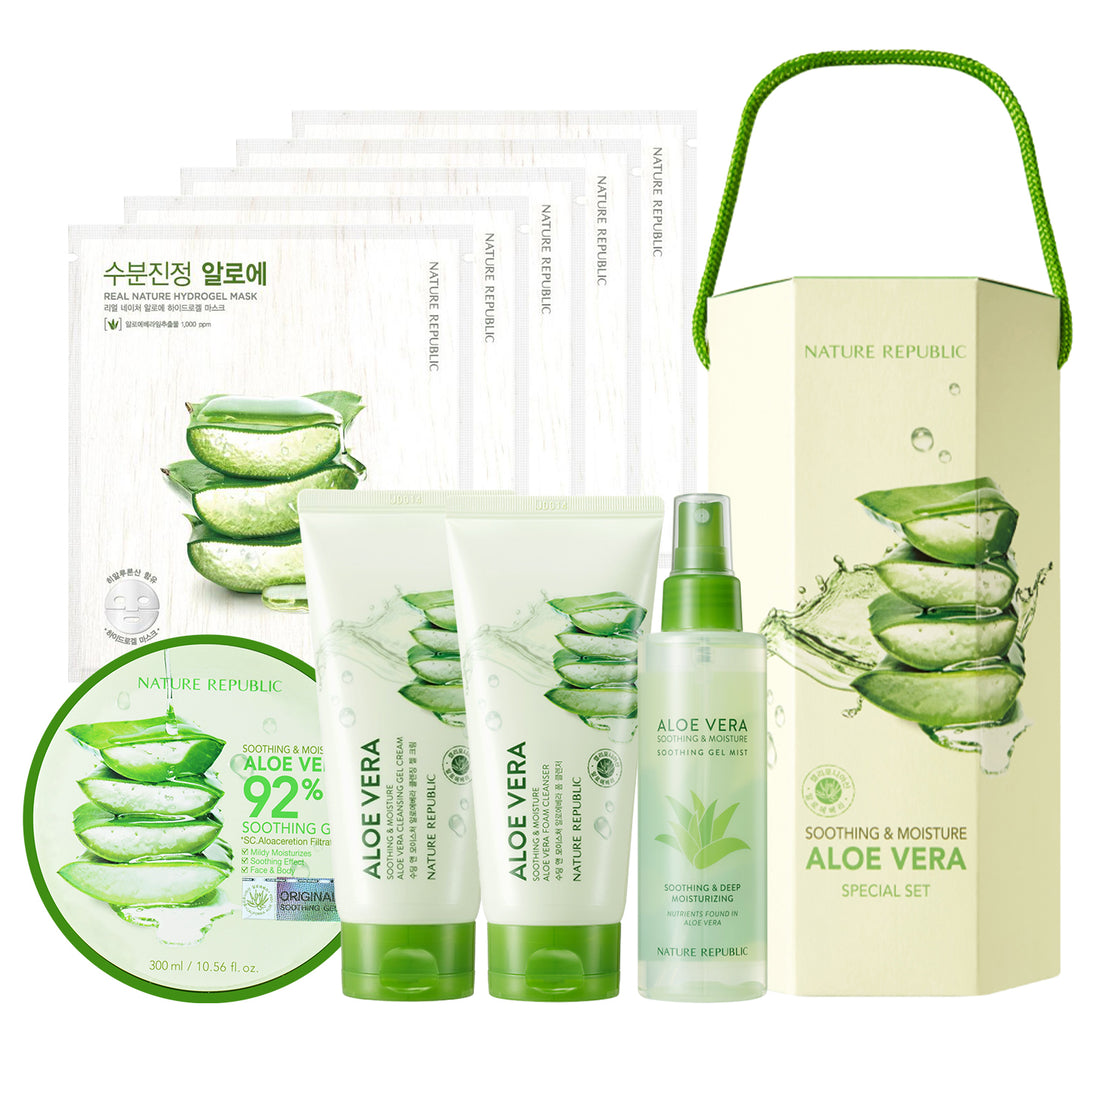 Soothing & Moisture Aloe Vera Gift Box 2 (Soothing Gel, Foam Cleanser, Cleansing Gel Cream, Mist, 5x Aloe Hydrogel Mask Sheet)